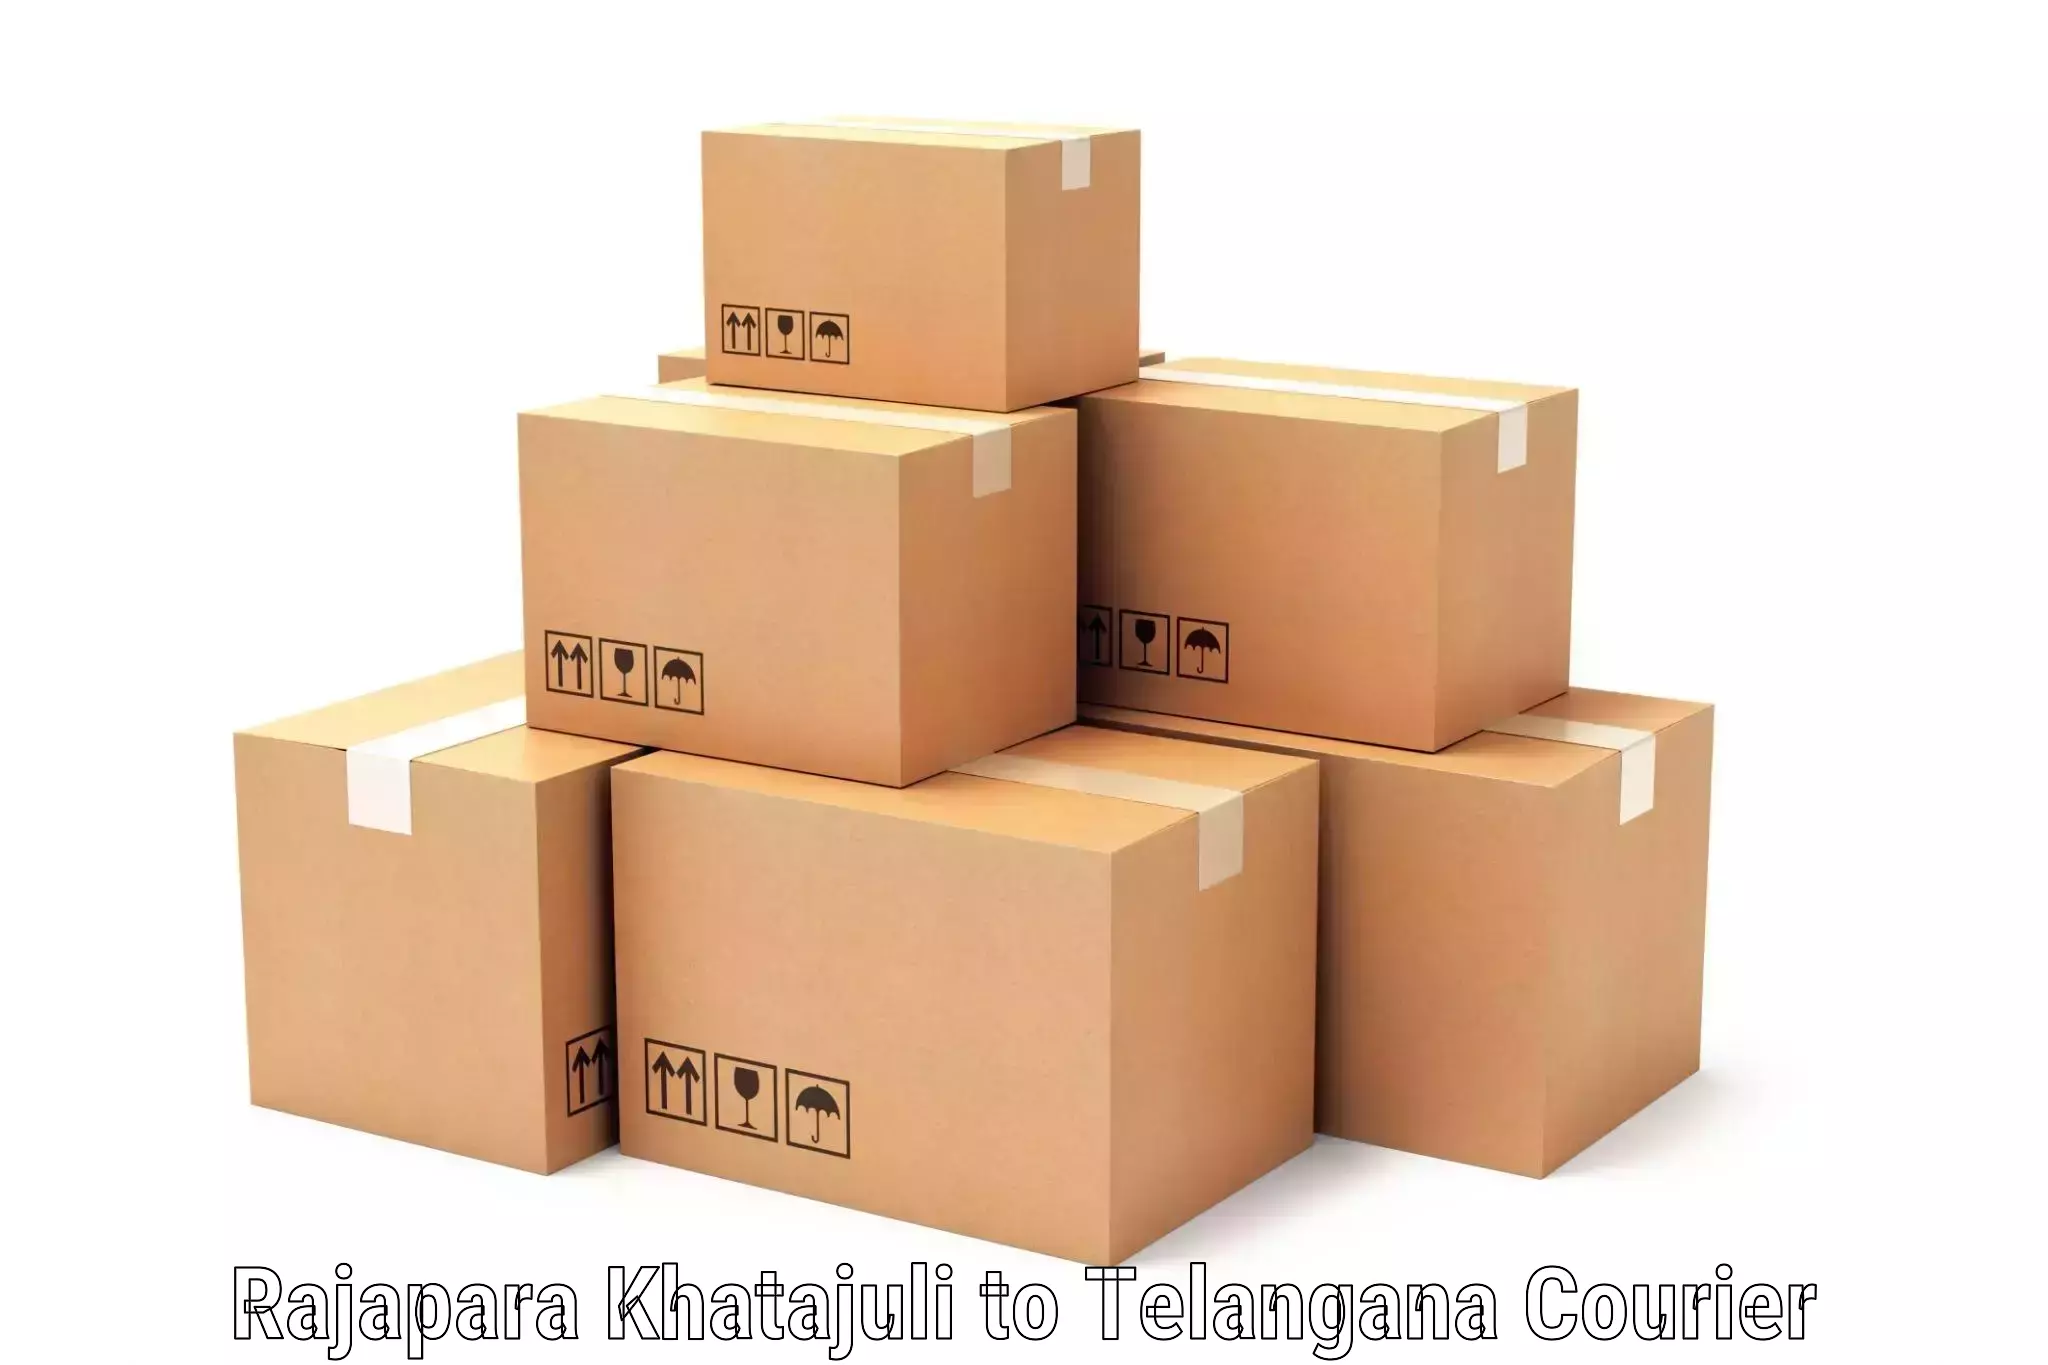 Customizable shipping options Rajapara Khatajuli to Yellareddy